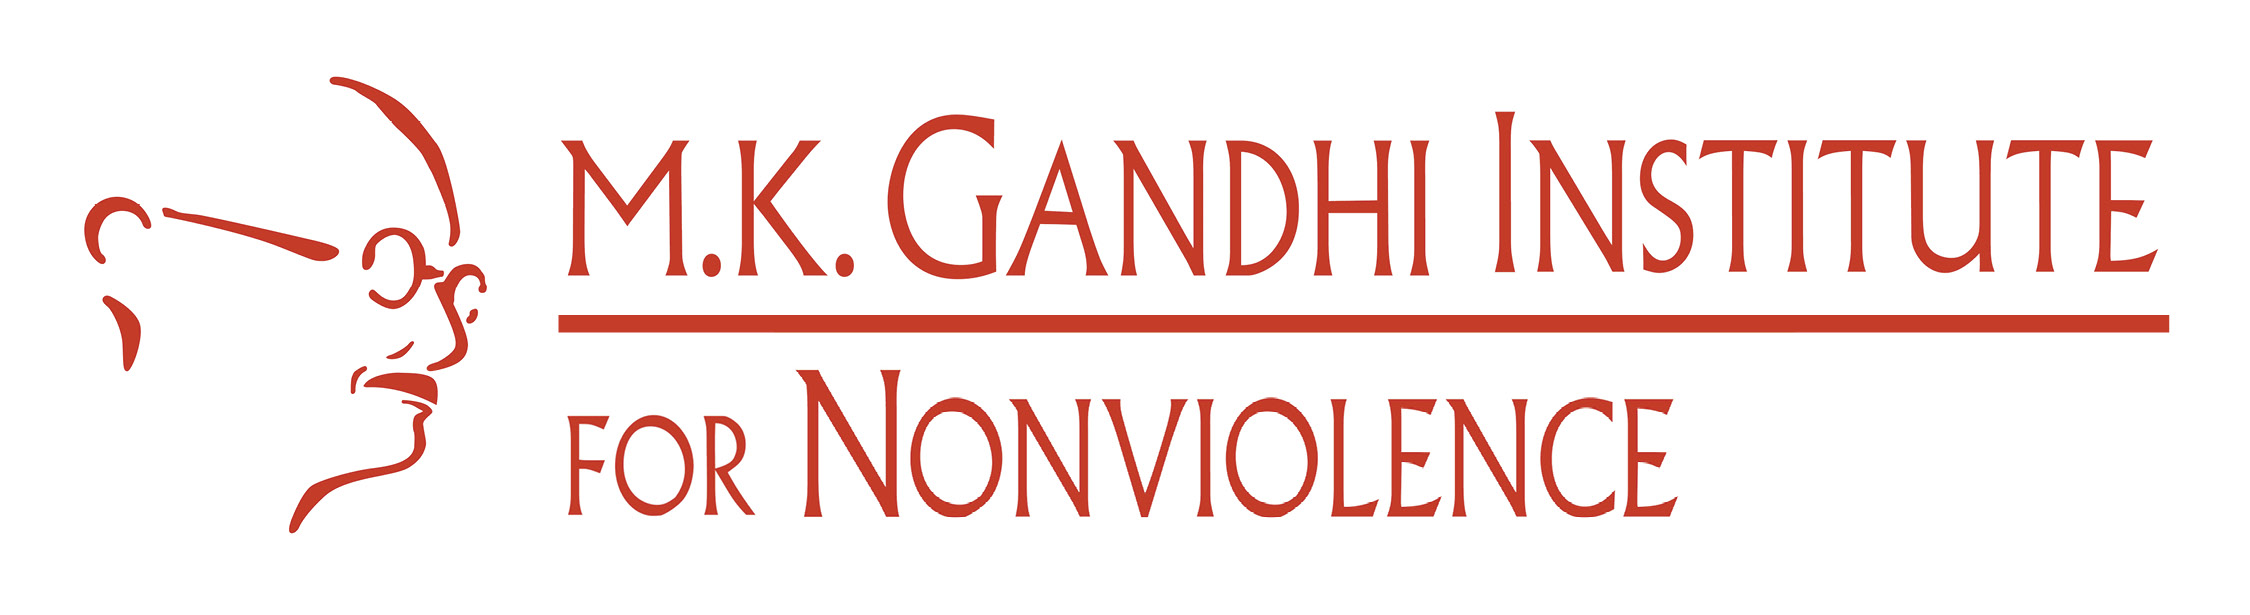 M.K. Gandhi Institute for Nonviolence logo